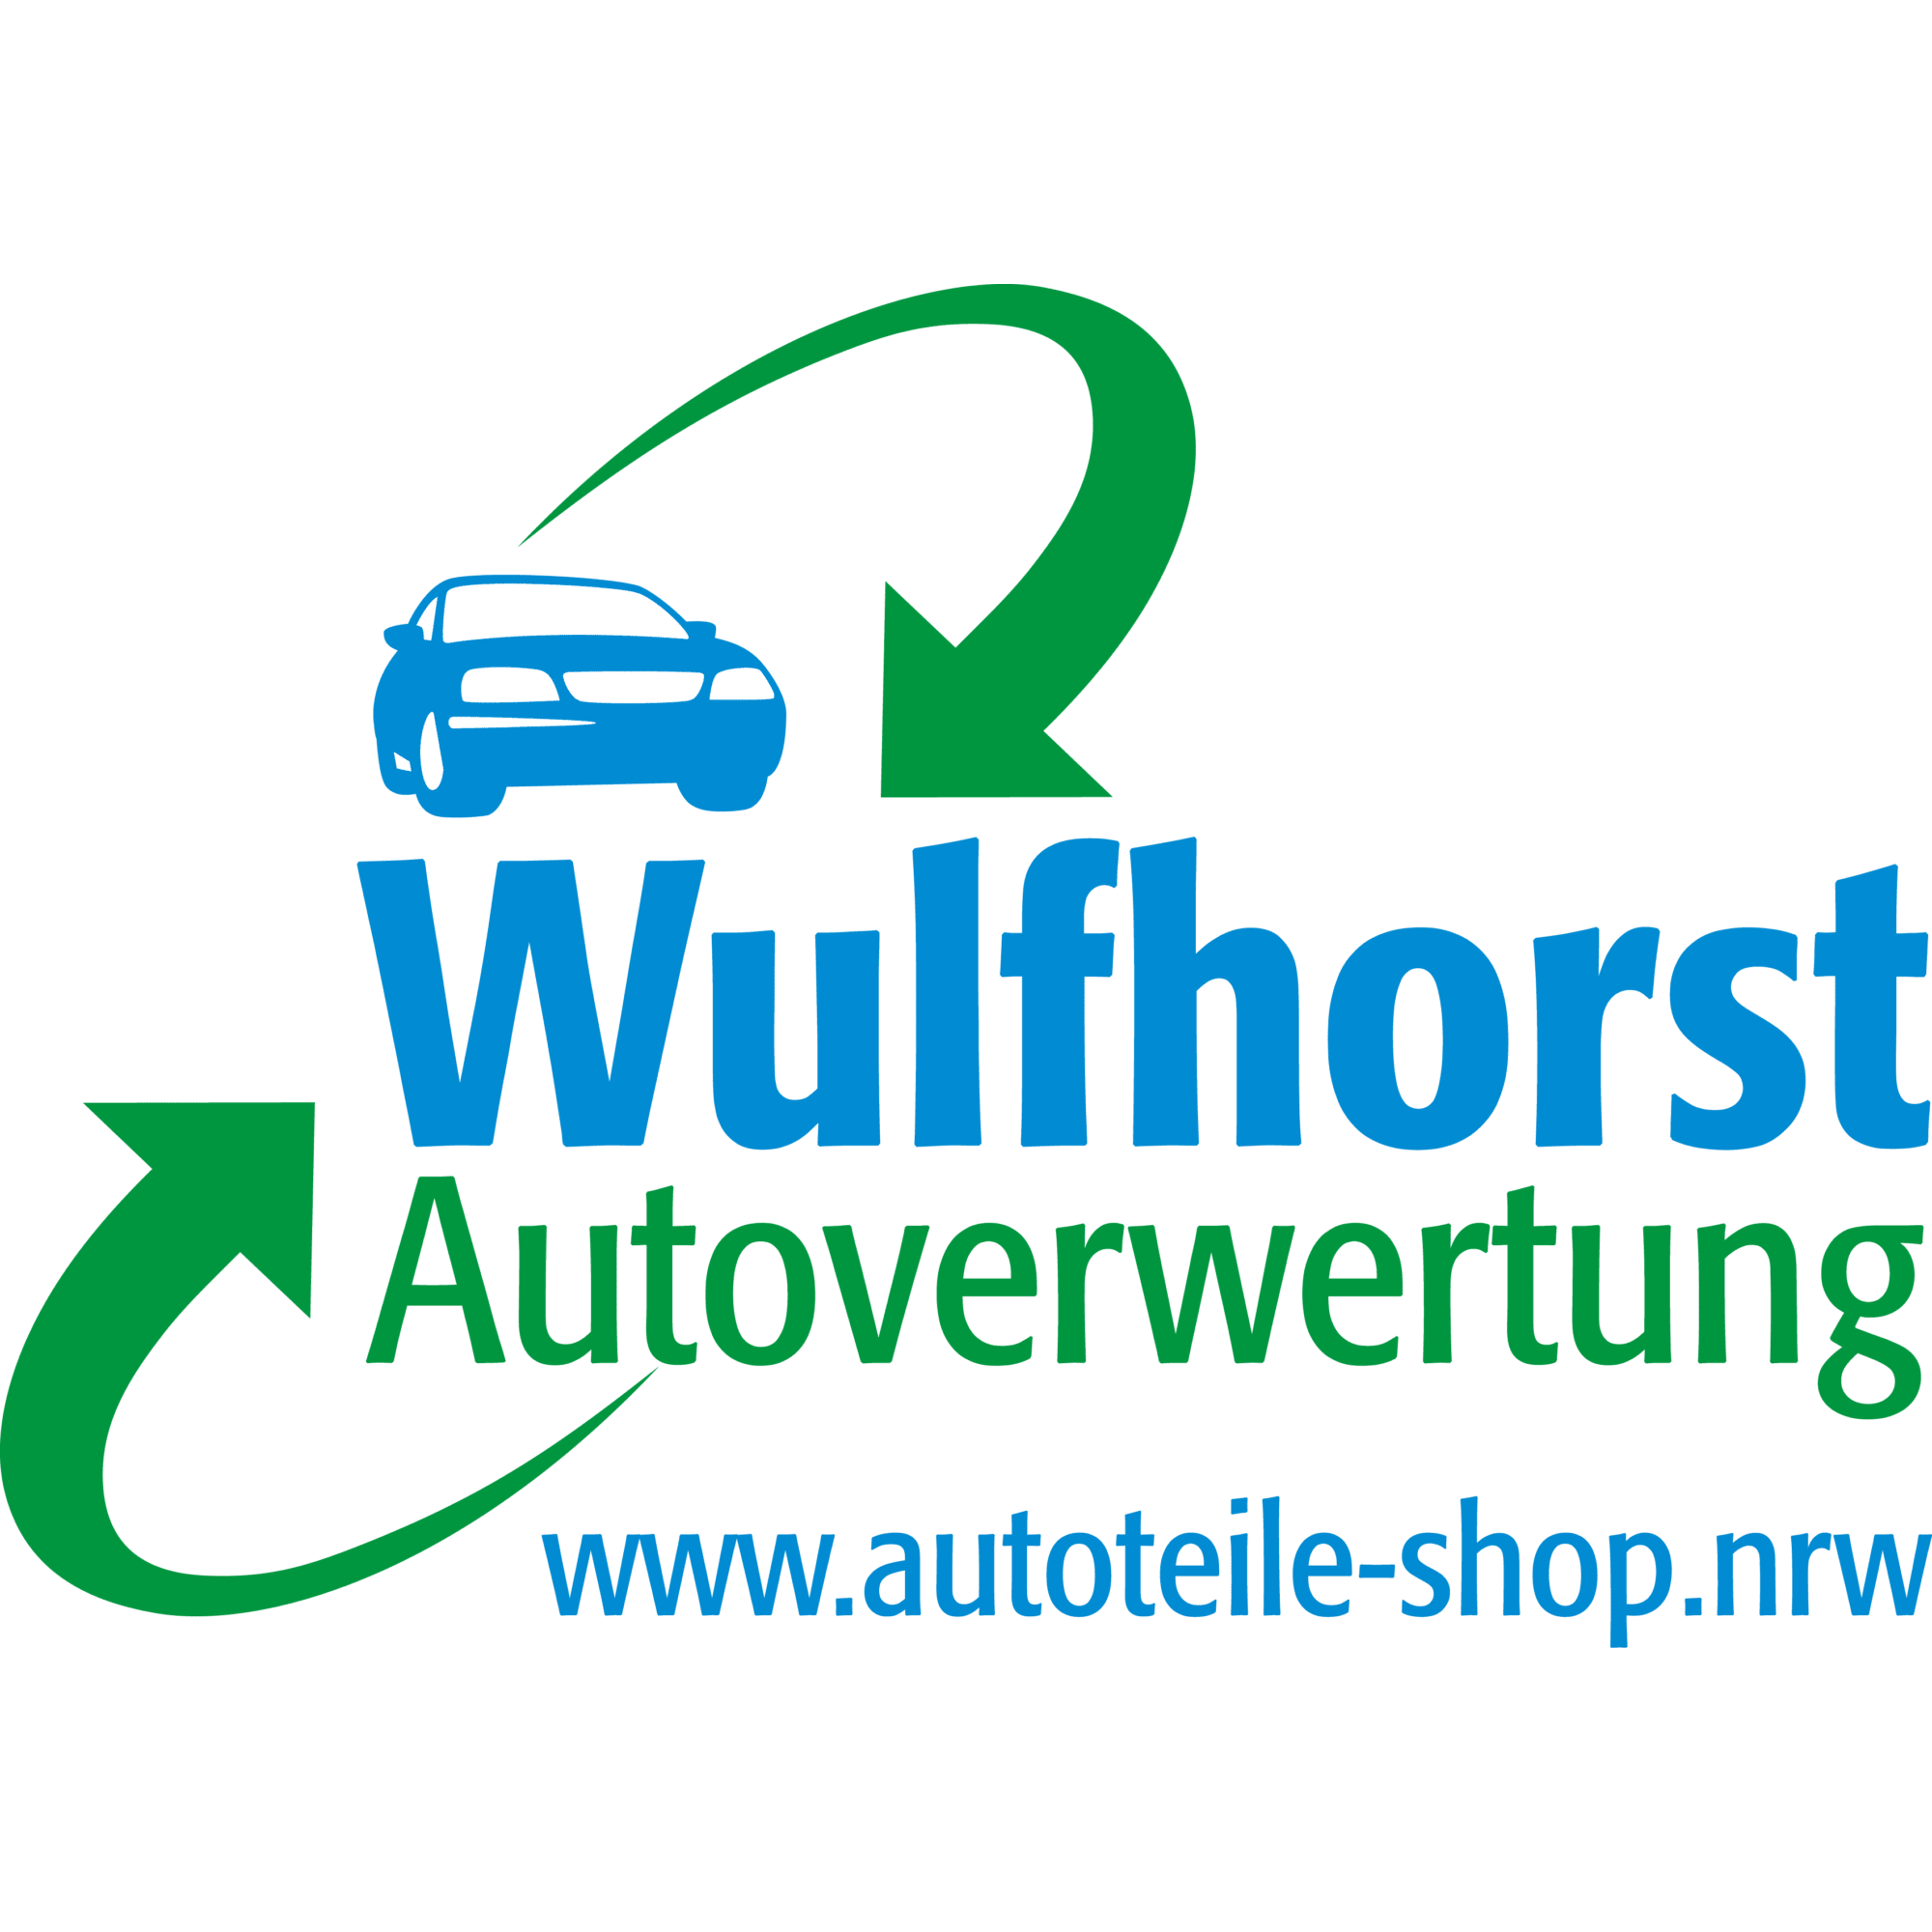 Autoverwertung www.autoteile-shop.nrw Wulfhorst Logo